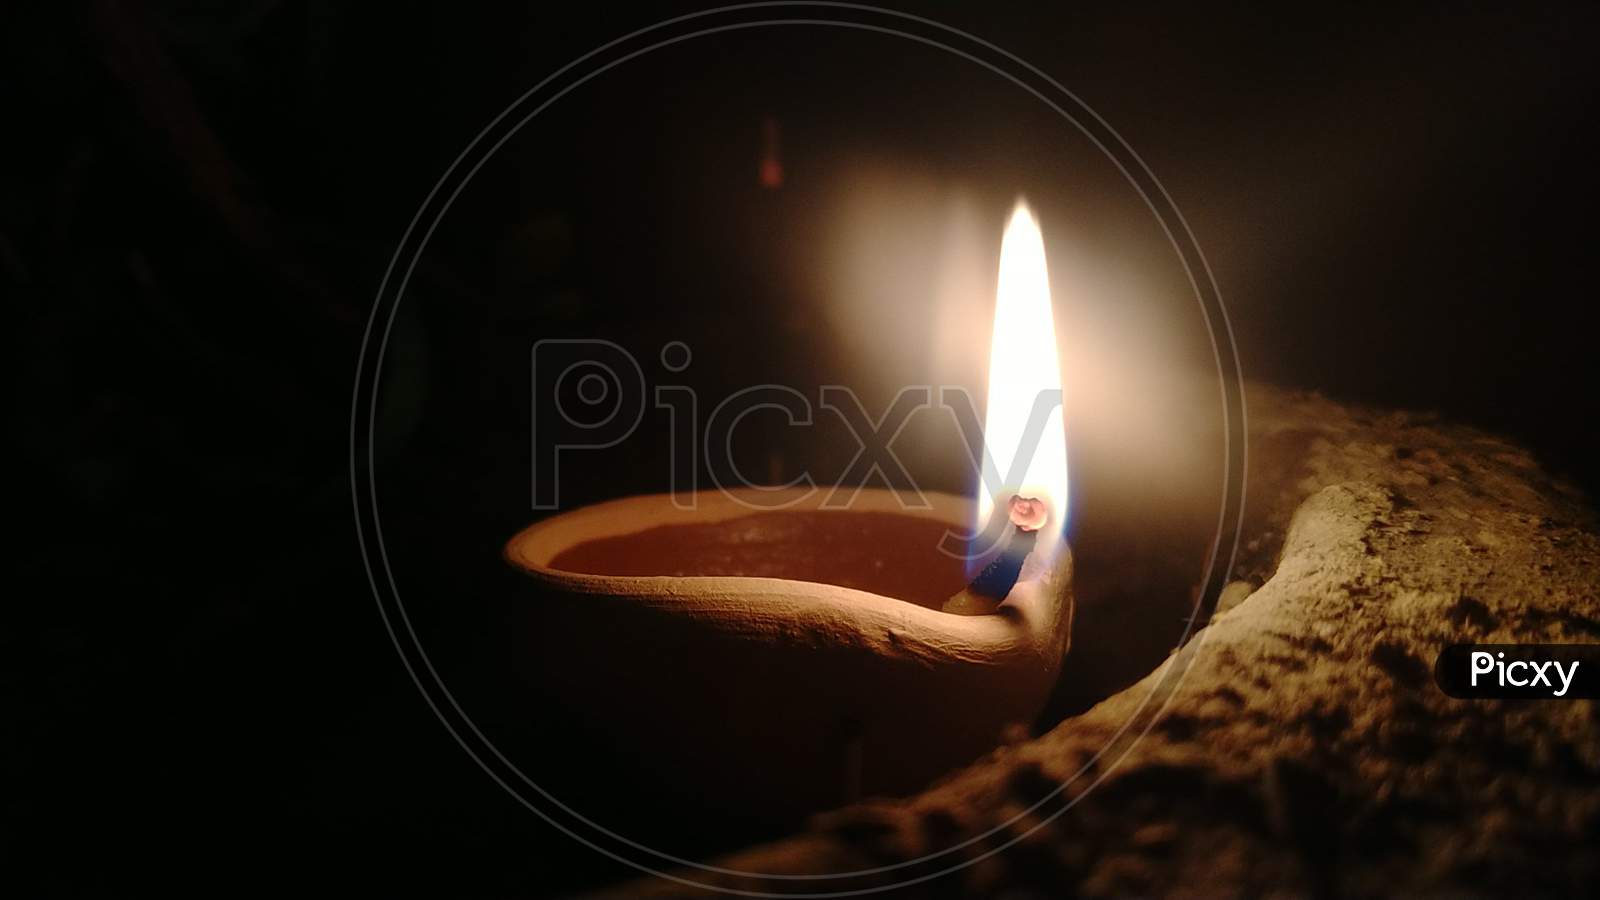 Picture of Diya , diwali